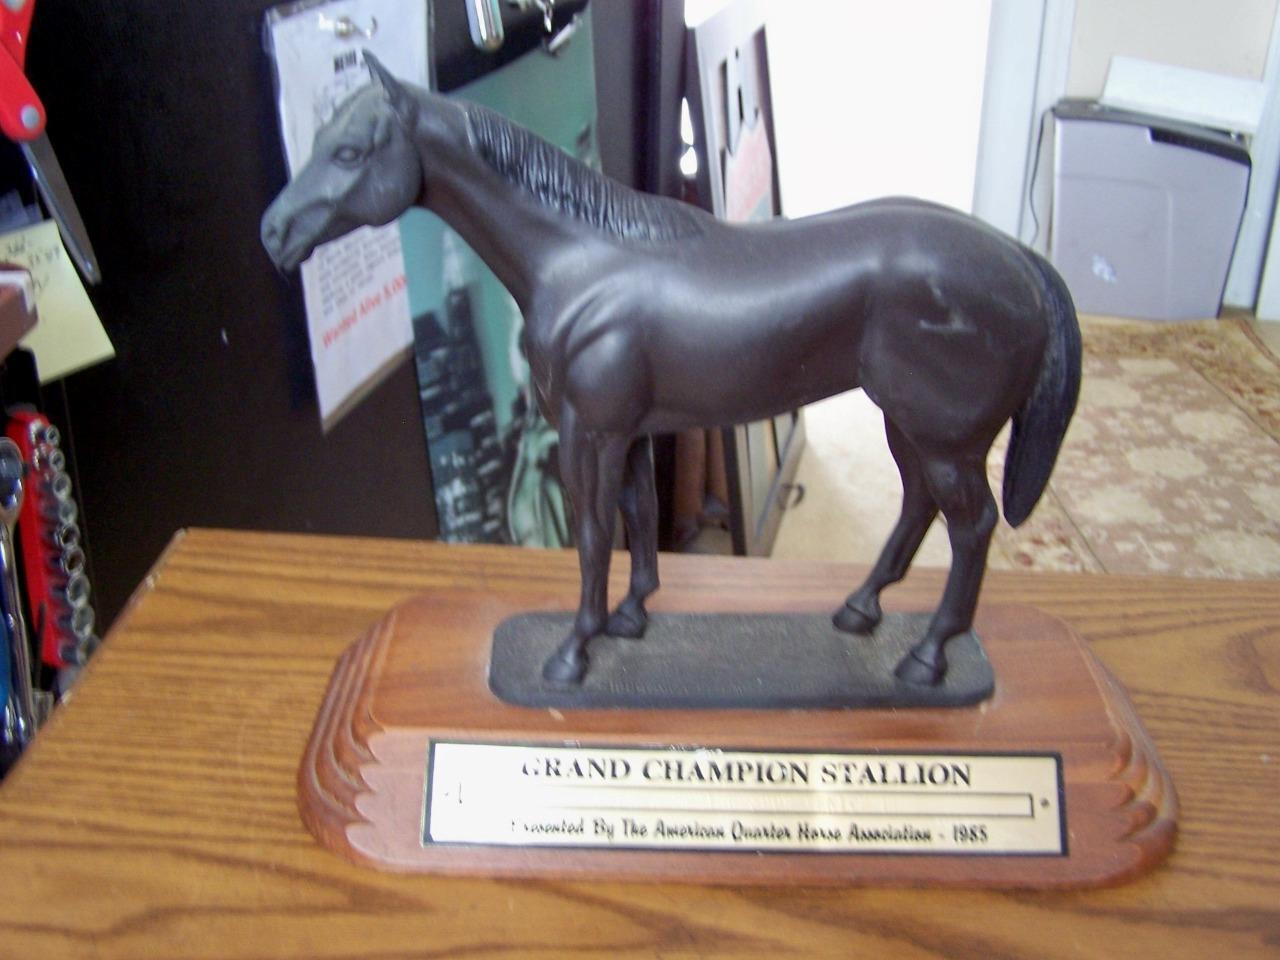 1985 Grand Champion Stallion Trophy American Quarter Horse association